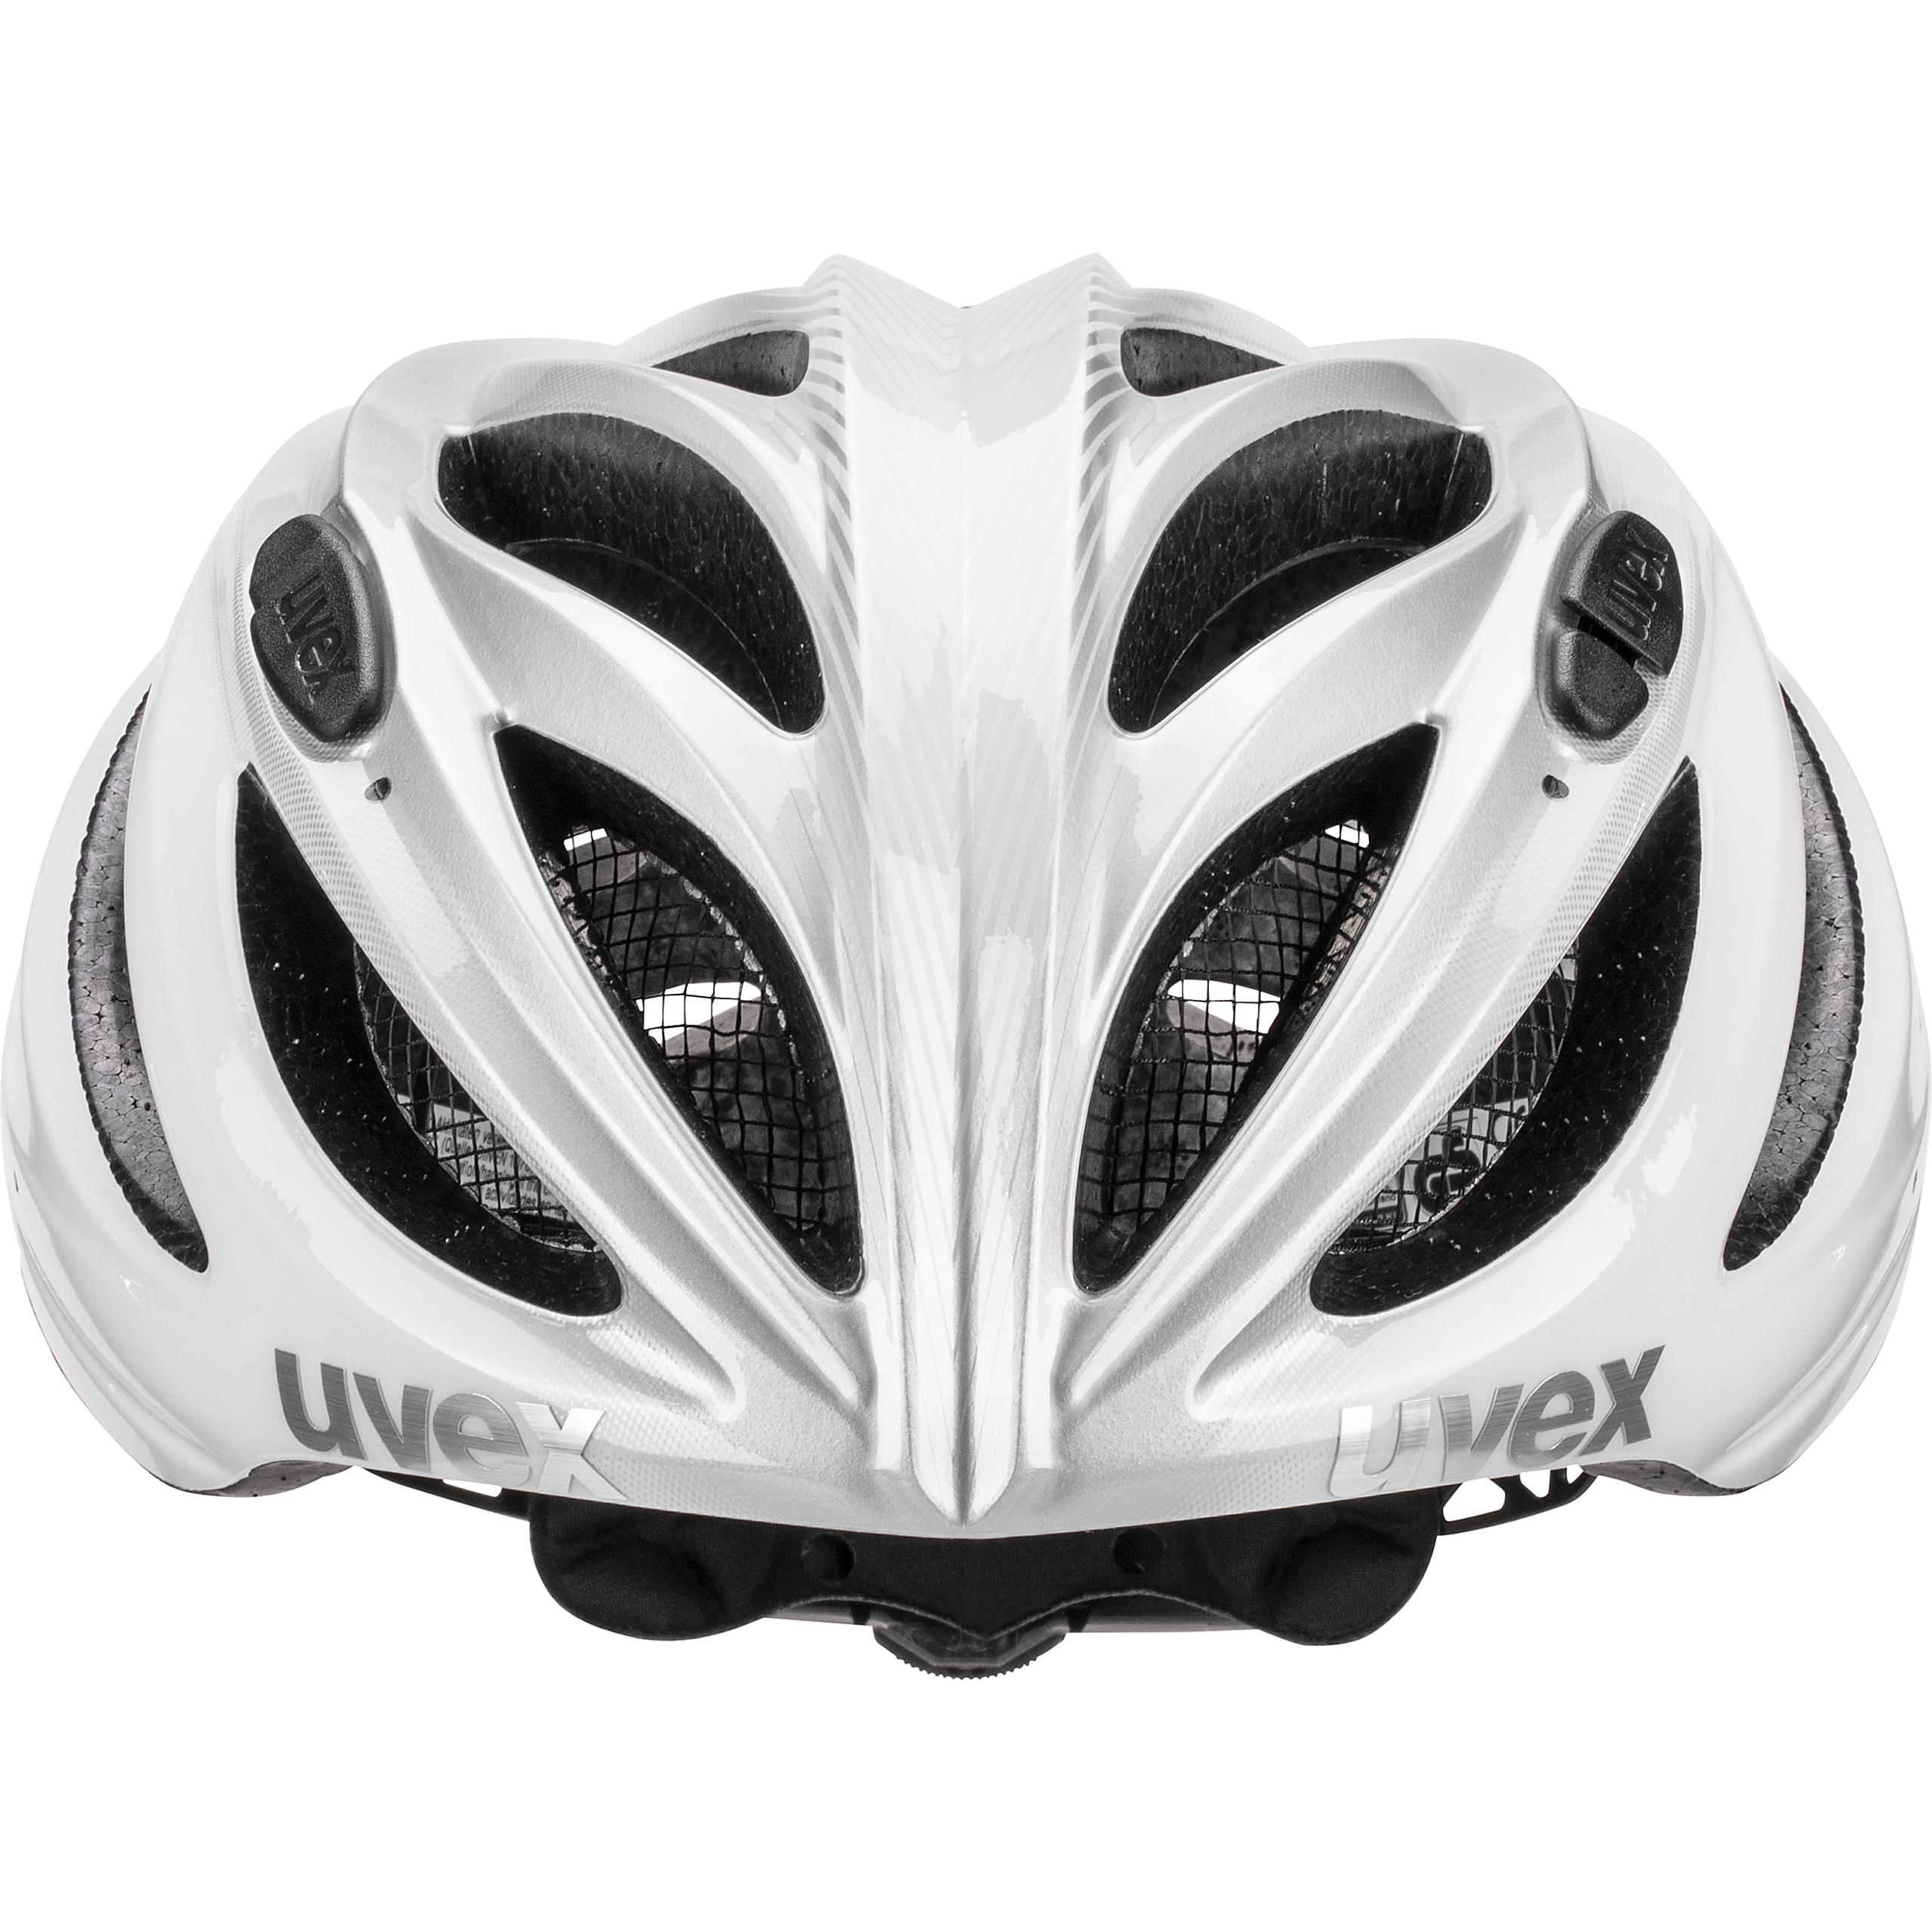 nuevo en embalaje original! Casco de bicicleta-UVEX Boss Race White//Silver 52-56cm